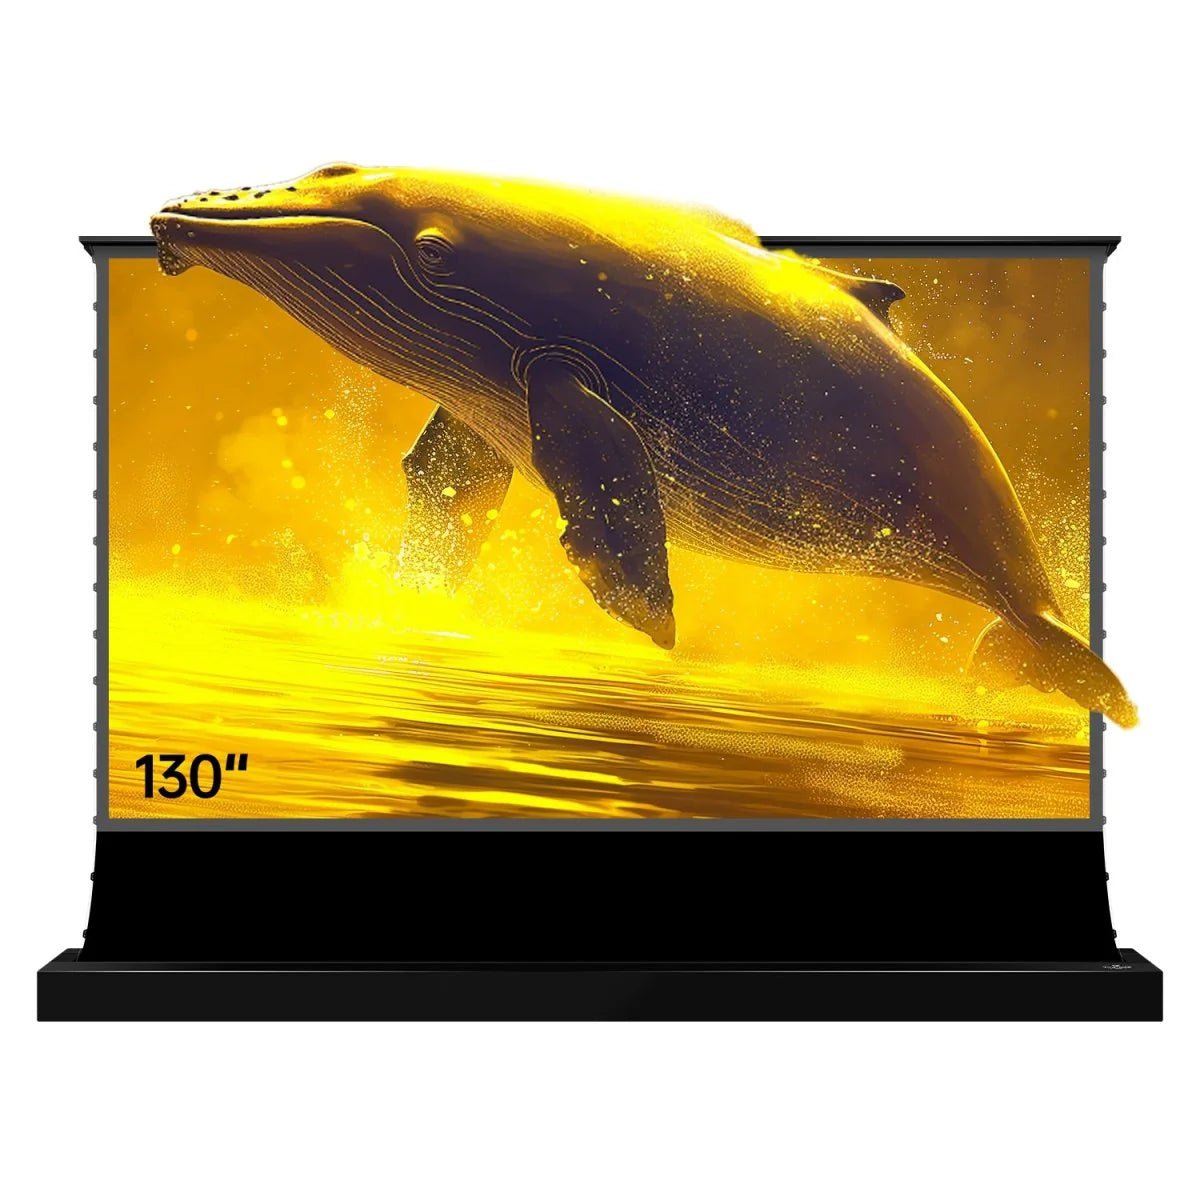 Vividstorm-Bildschirm graue Farbe UST S Pro 4K HD 3D-Anti-Licht-motorisierter tragbarer Laser-Bodenaufstiegsprojektor-ALR-Bildschirm